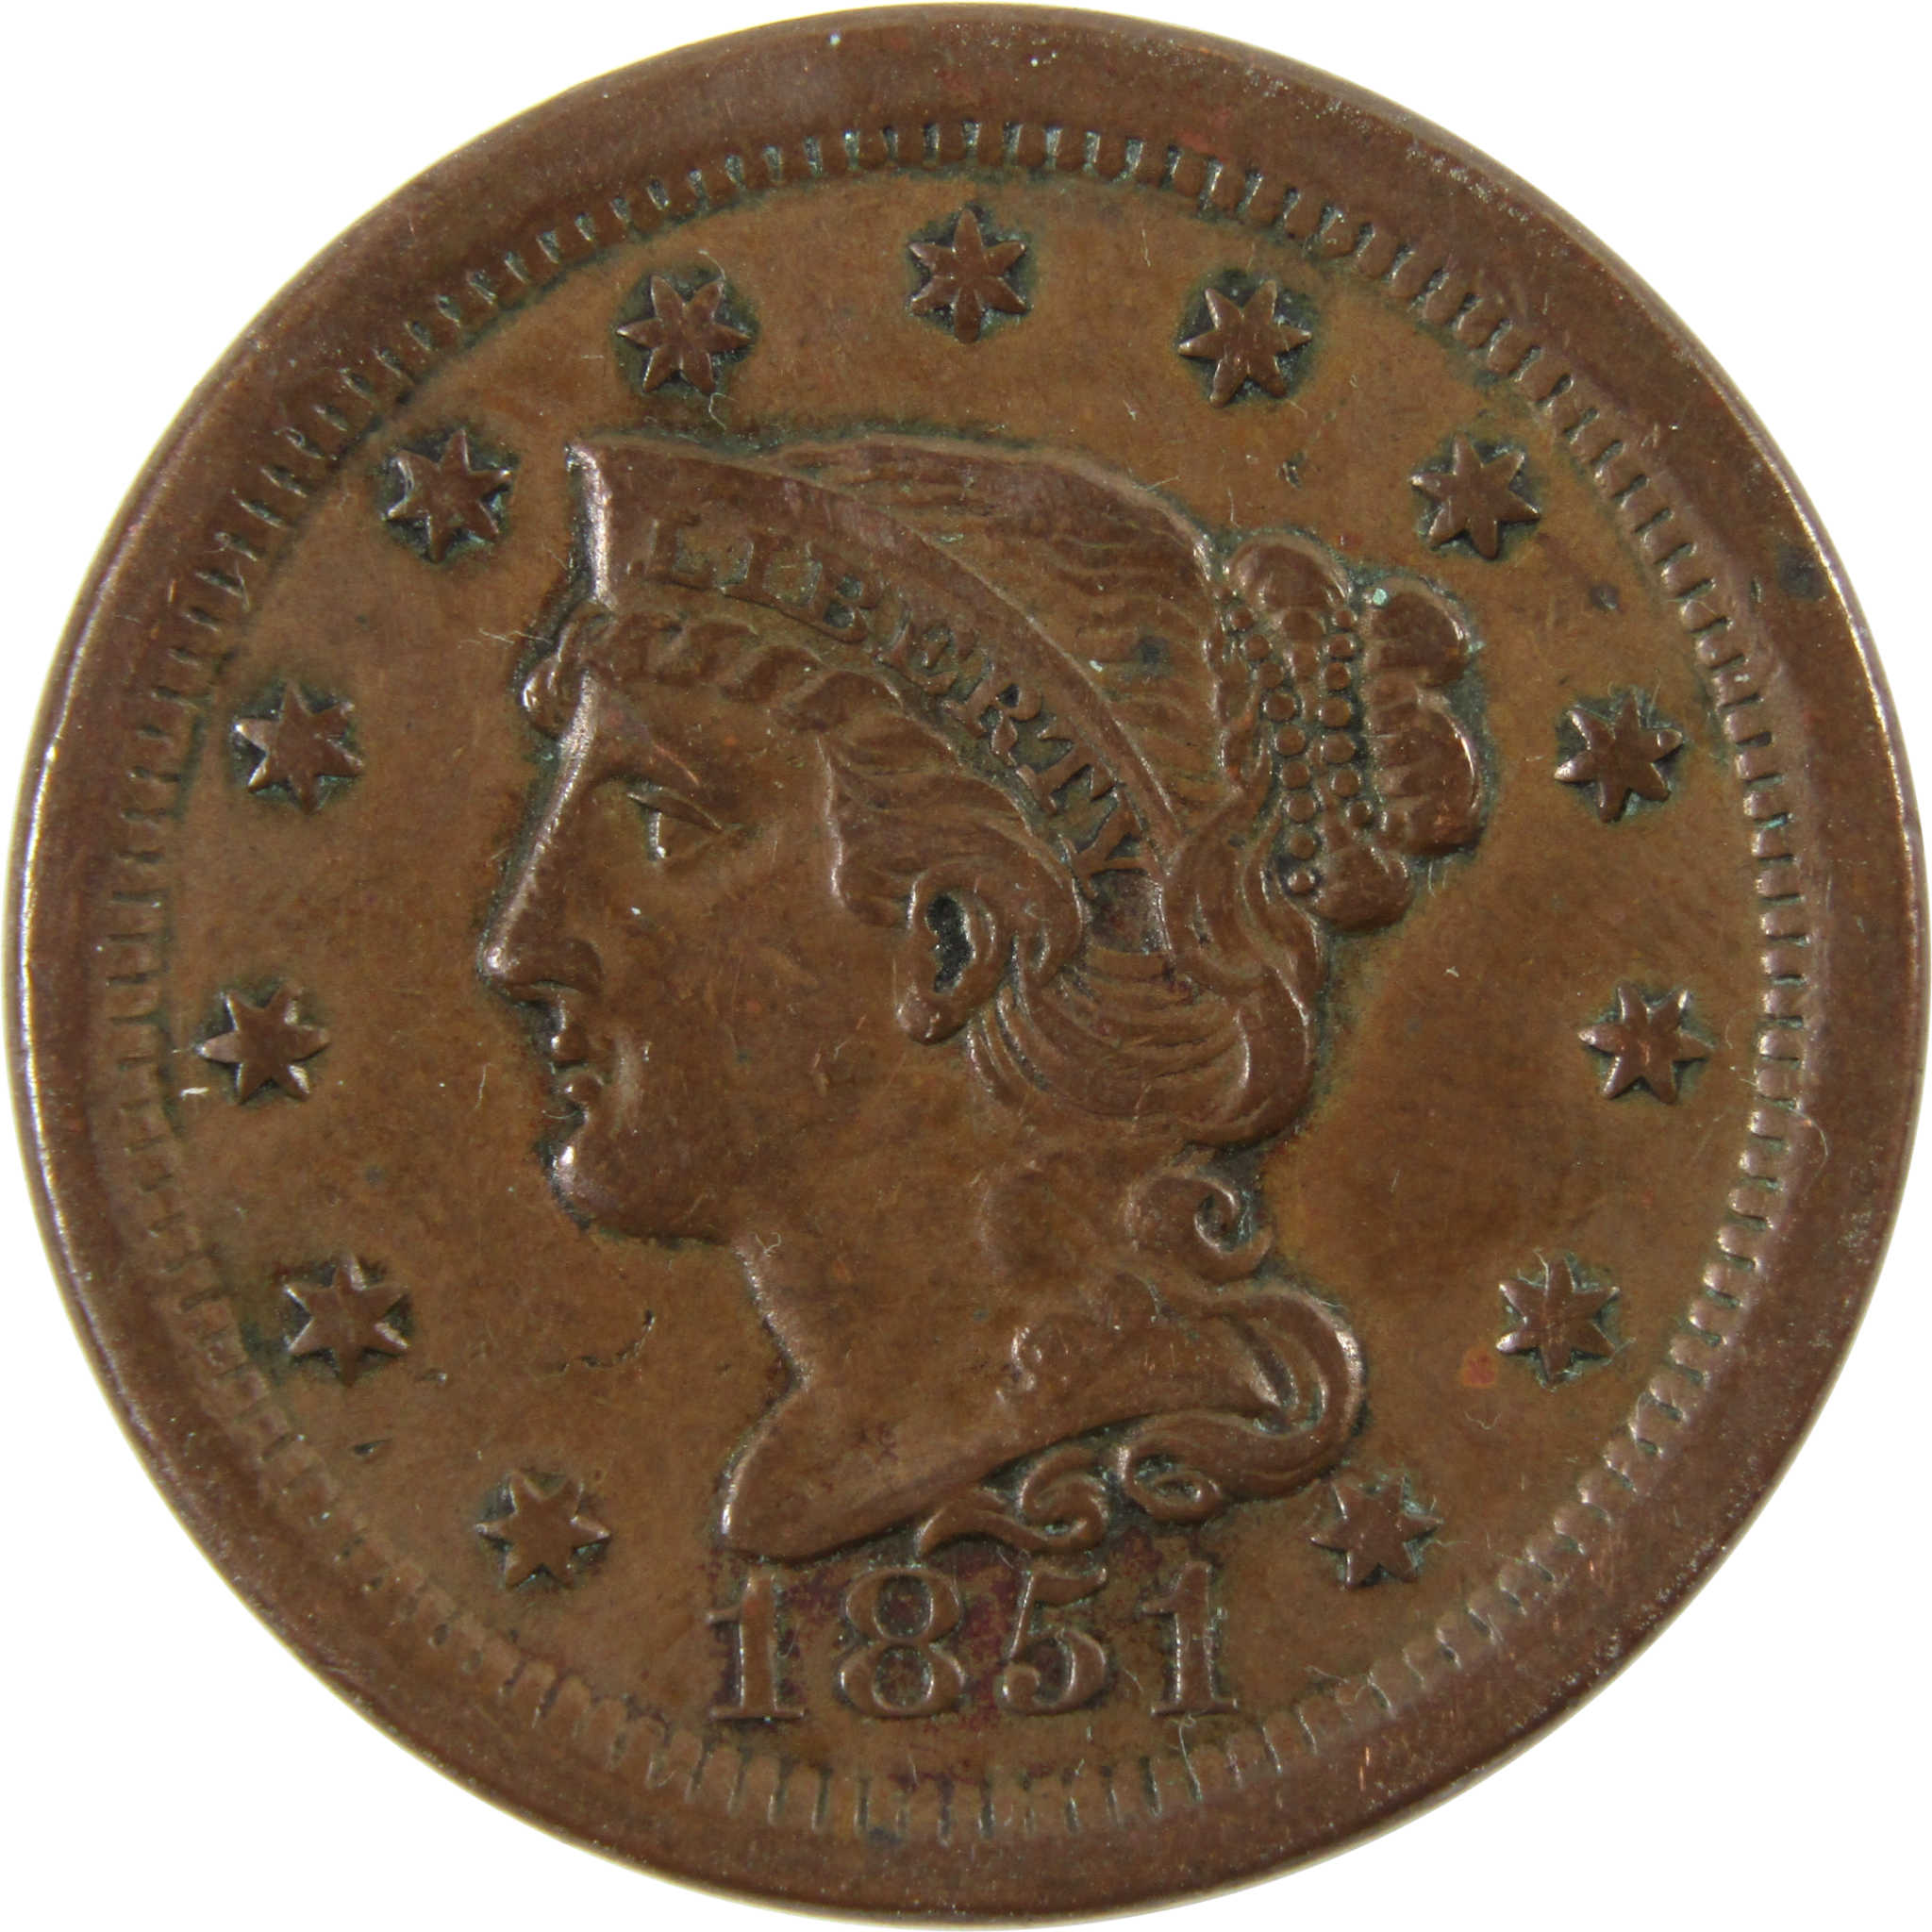 Value of 1851 Braided Hair Half Cent